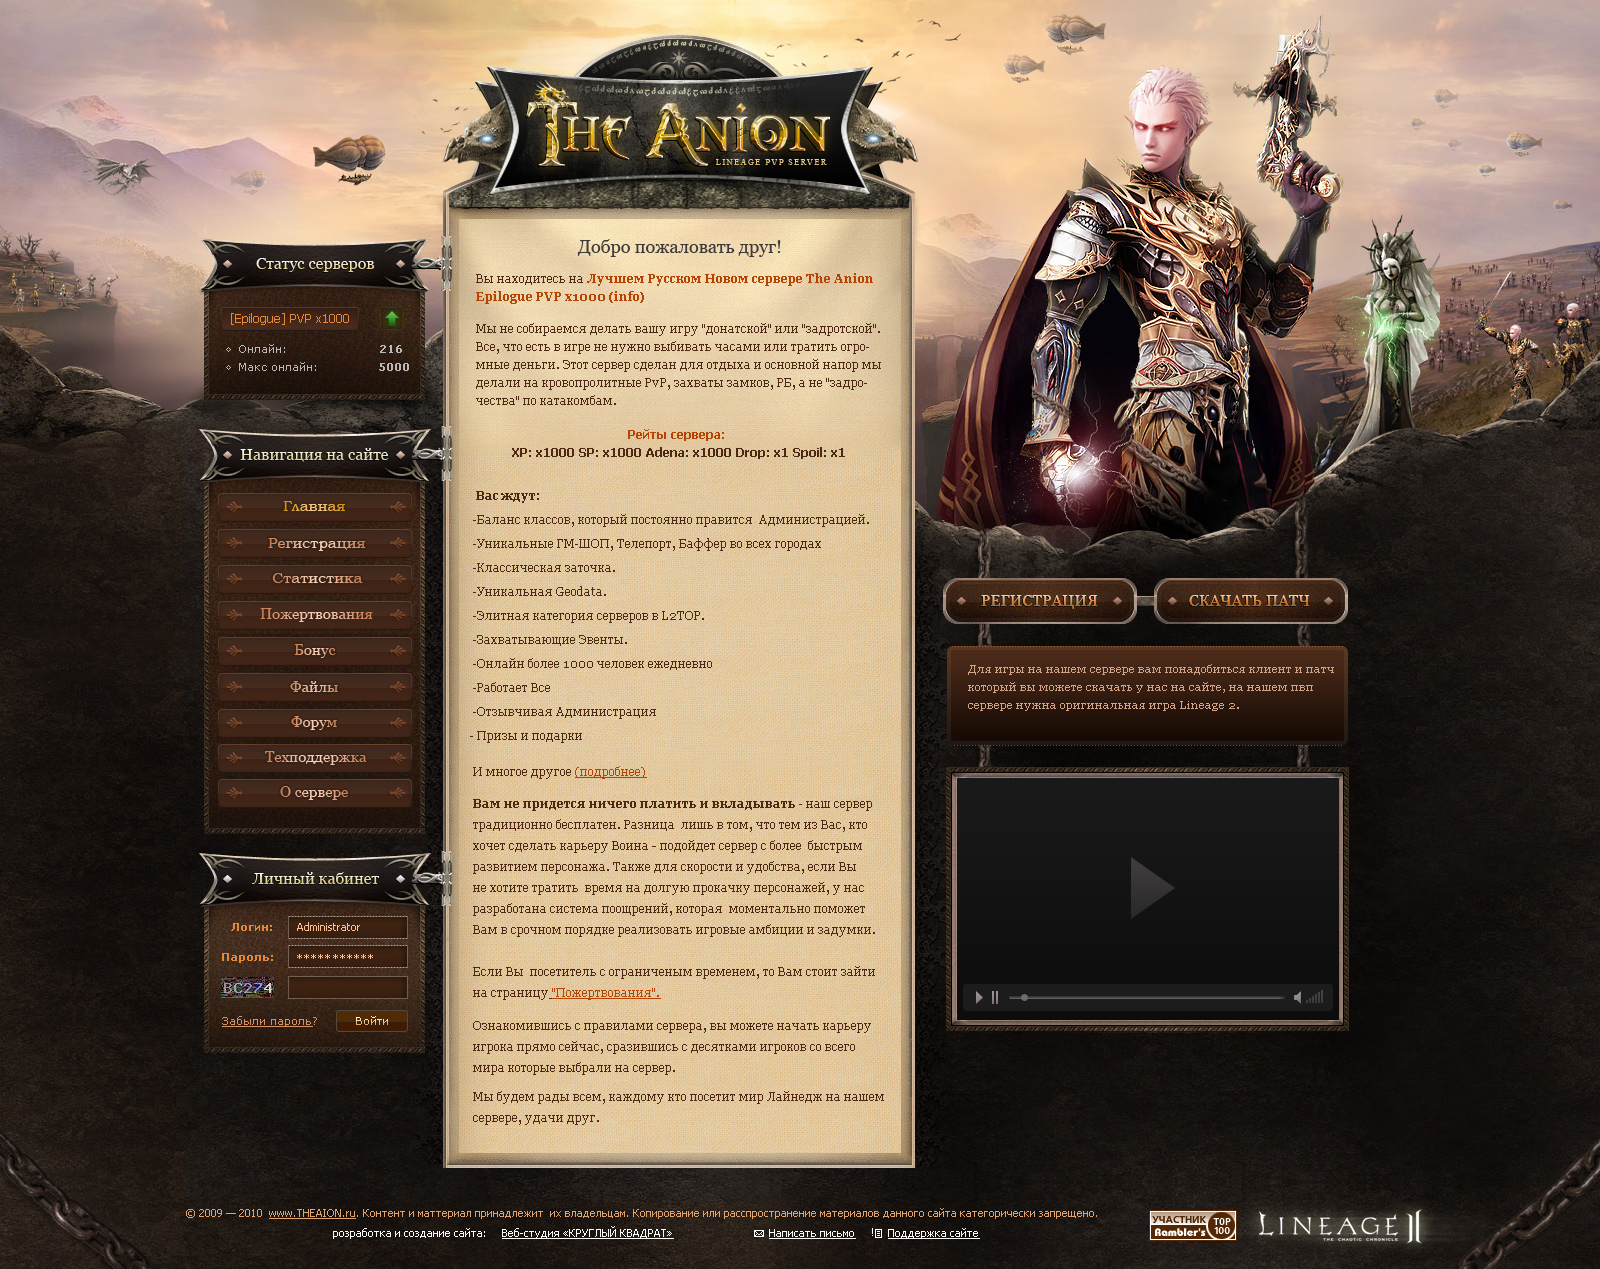 Дизайн сайта «The Anion» для сервера MMORPG игры Lineage II